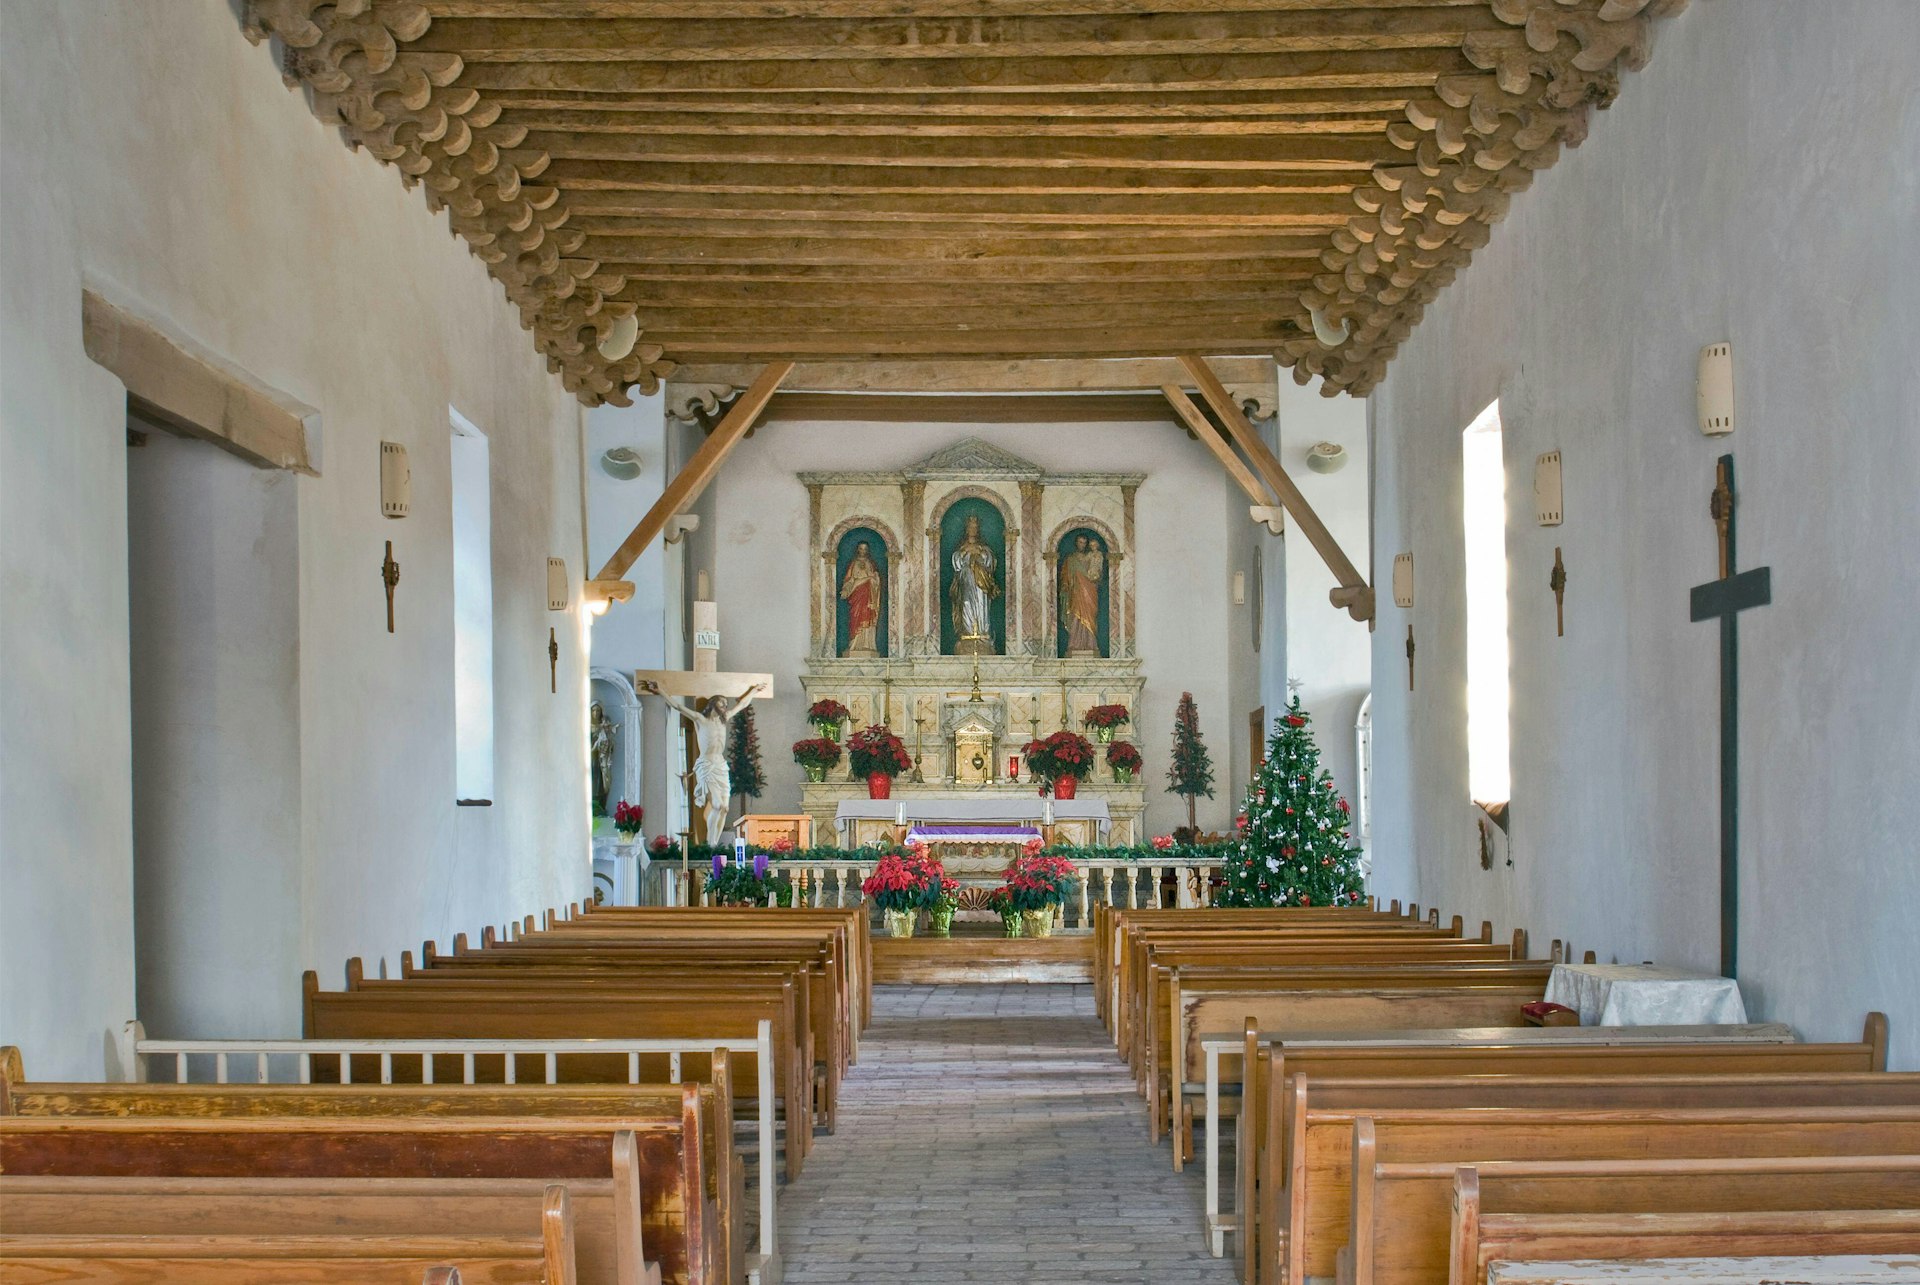 Church interior, decorated for Christmas, at Socorro Mission near El Paso, Texas, USA